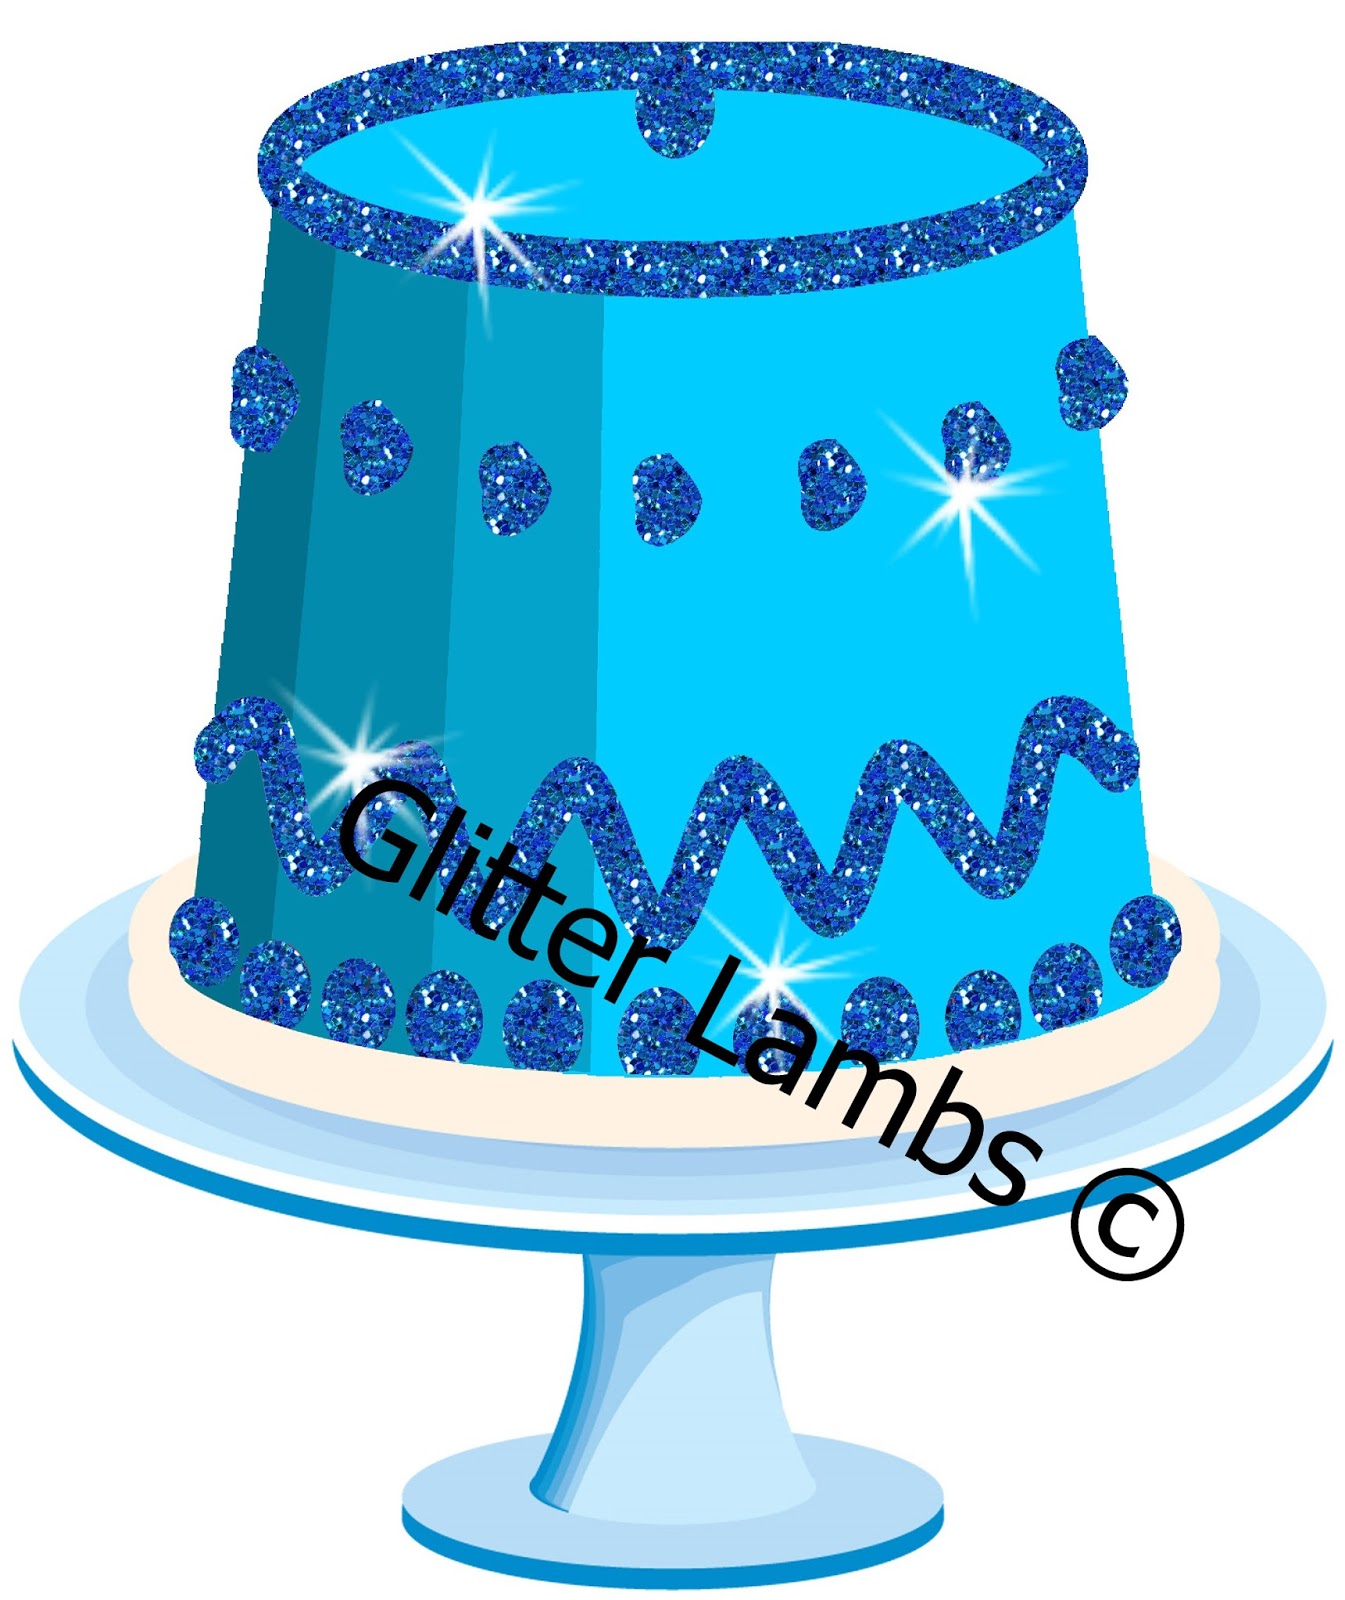 Blue Glitter Birthday Party Cake Clipart Illustration Digital Graphic